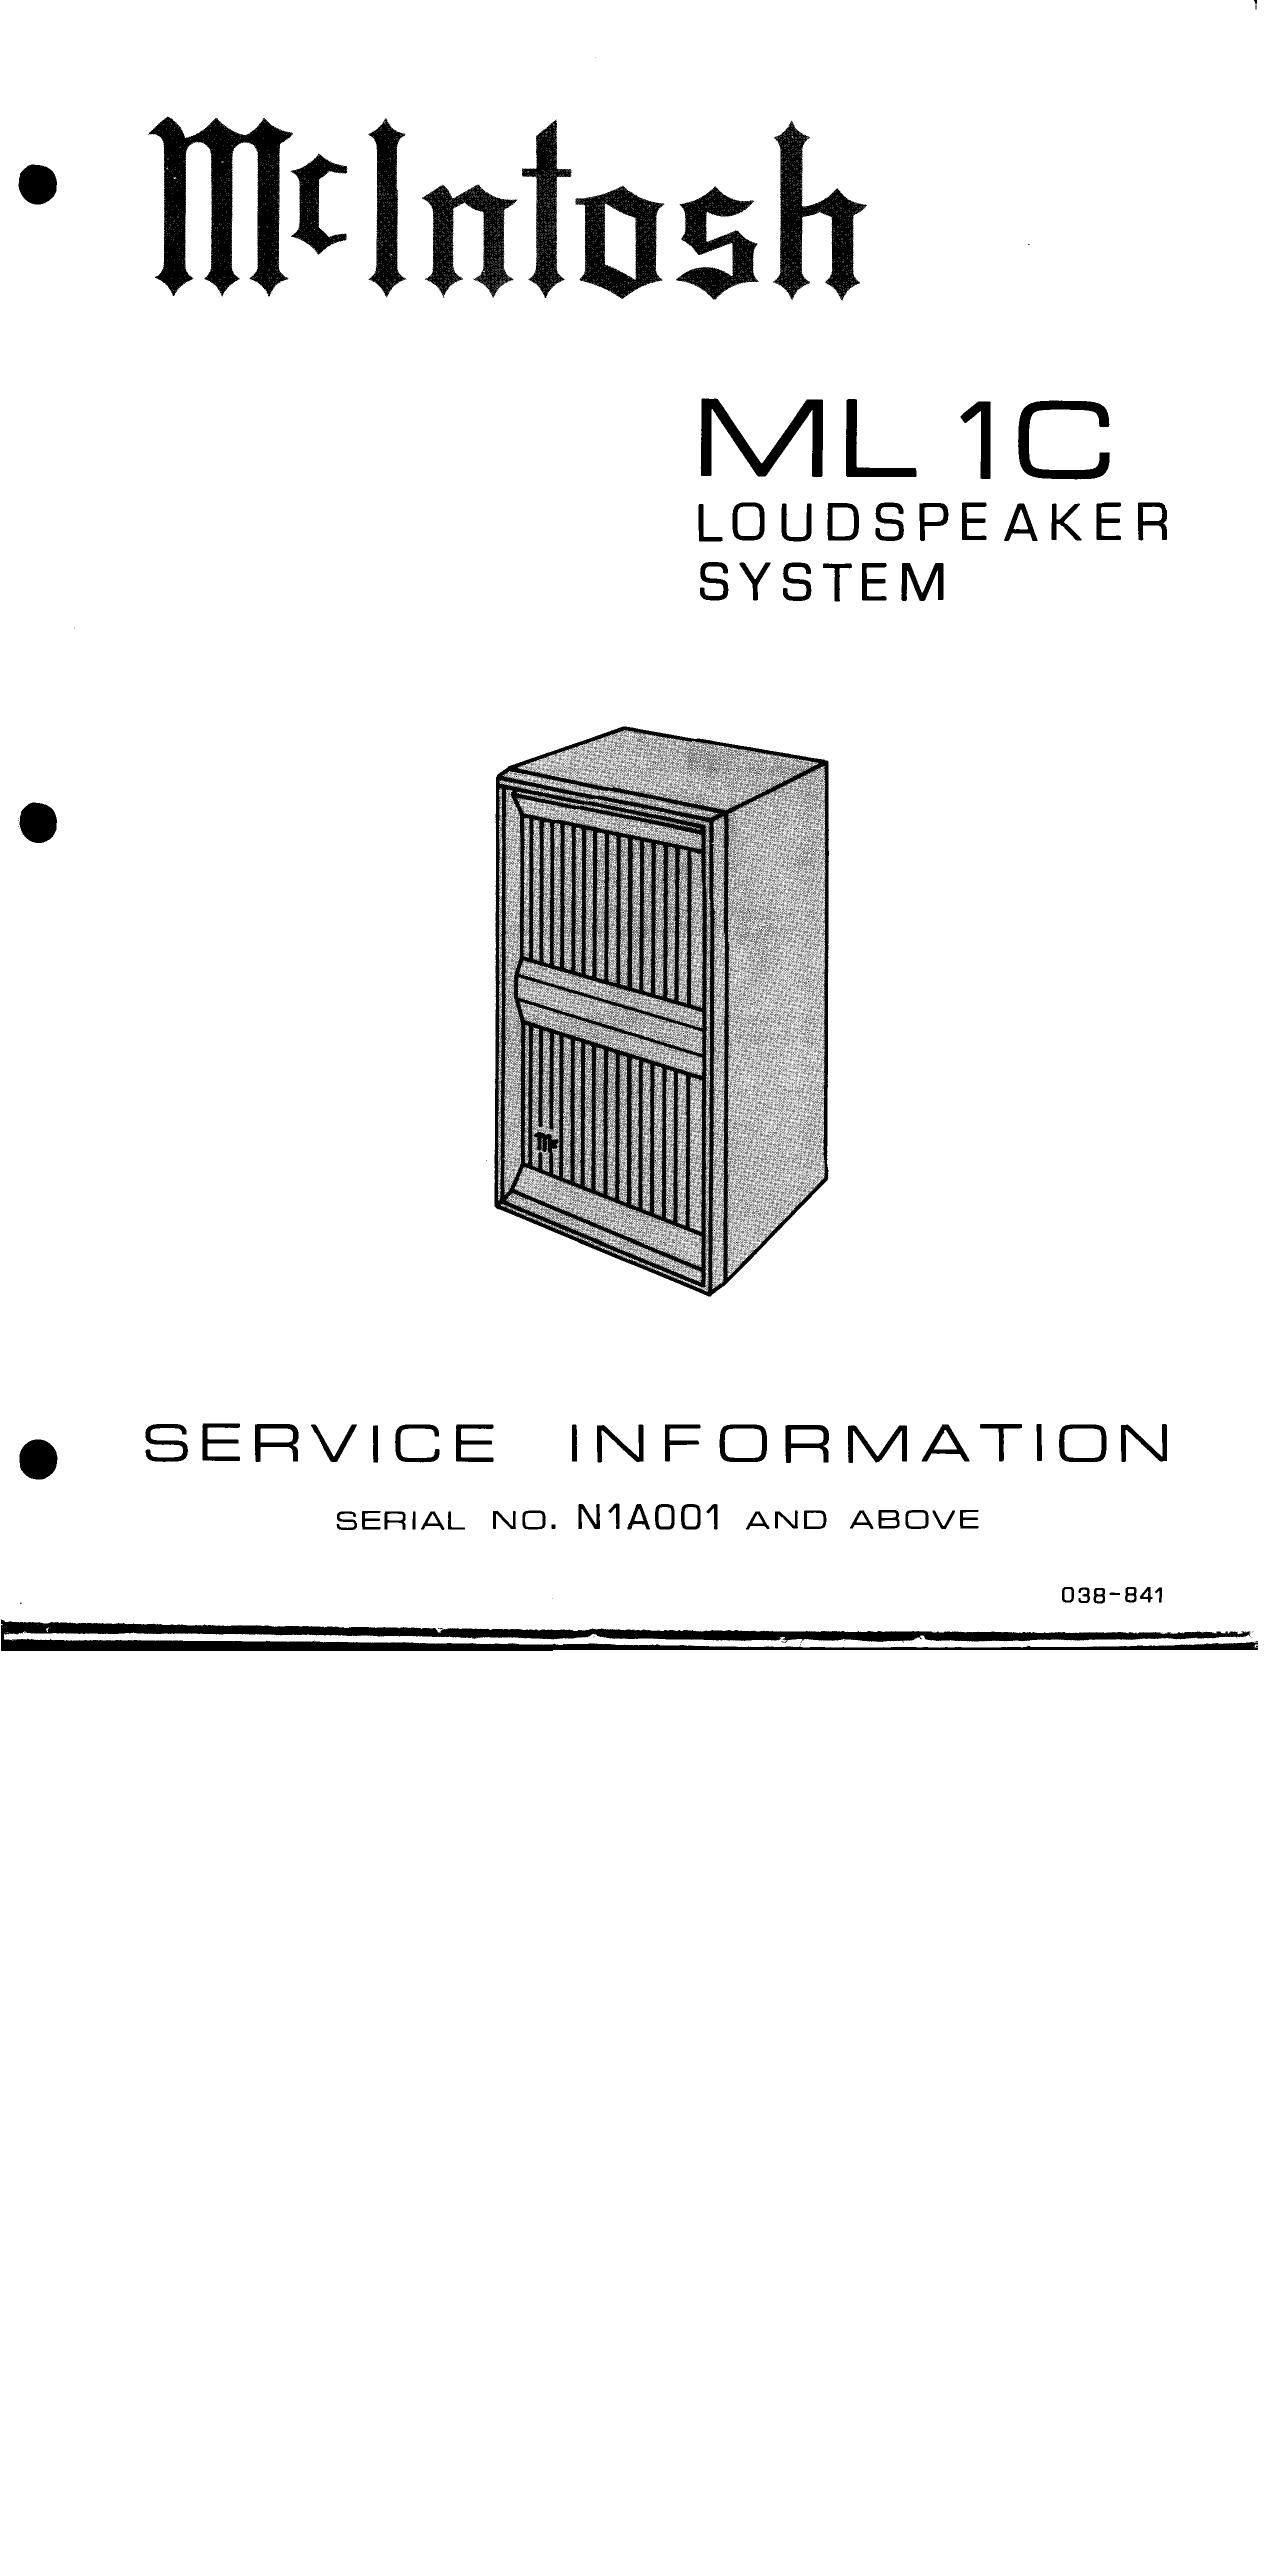 McIntosh ML 1C Service Manual